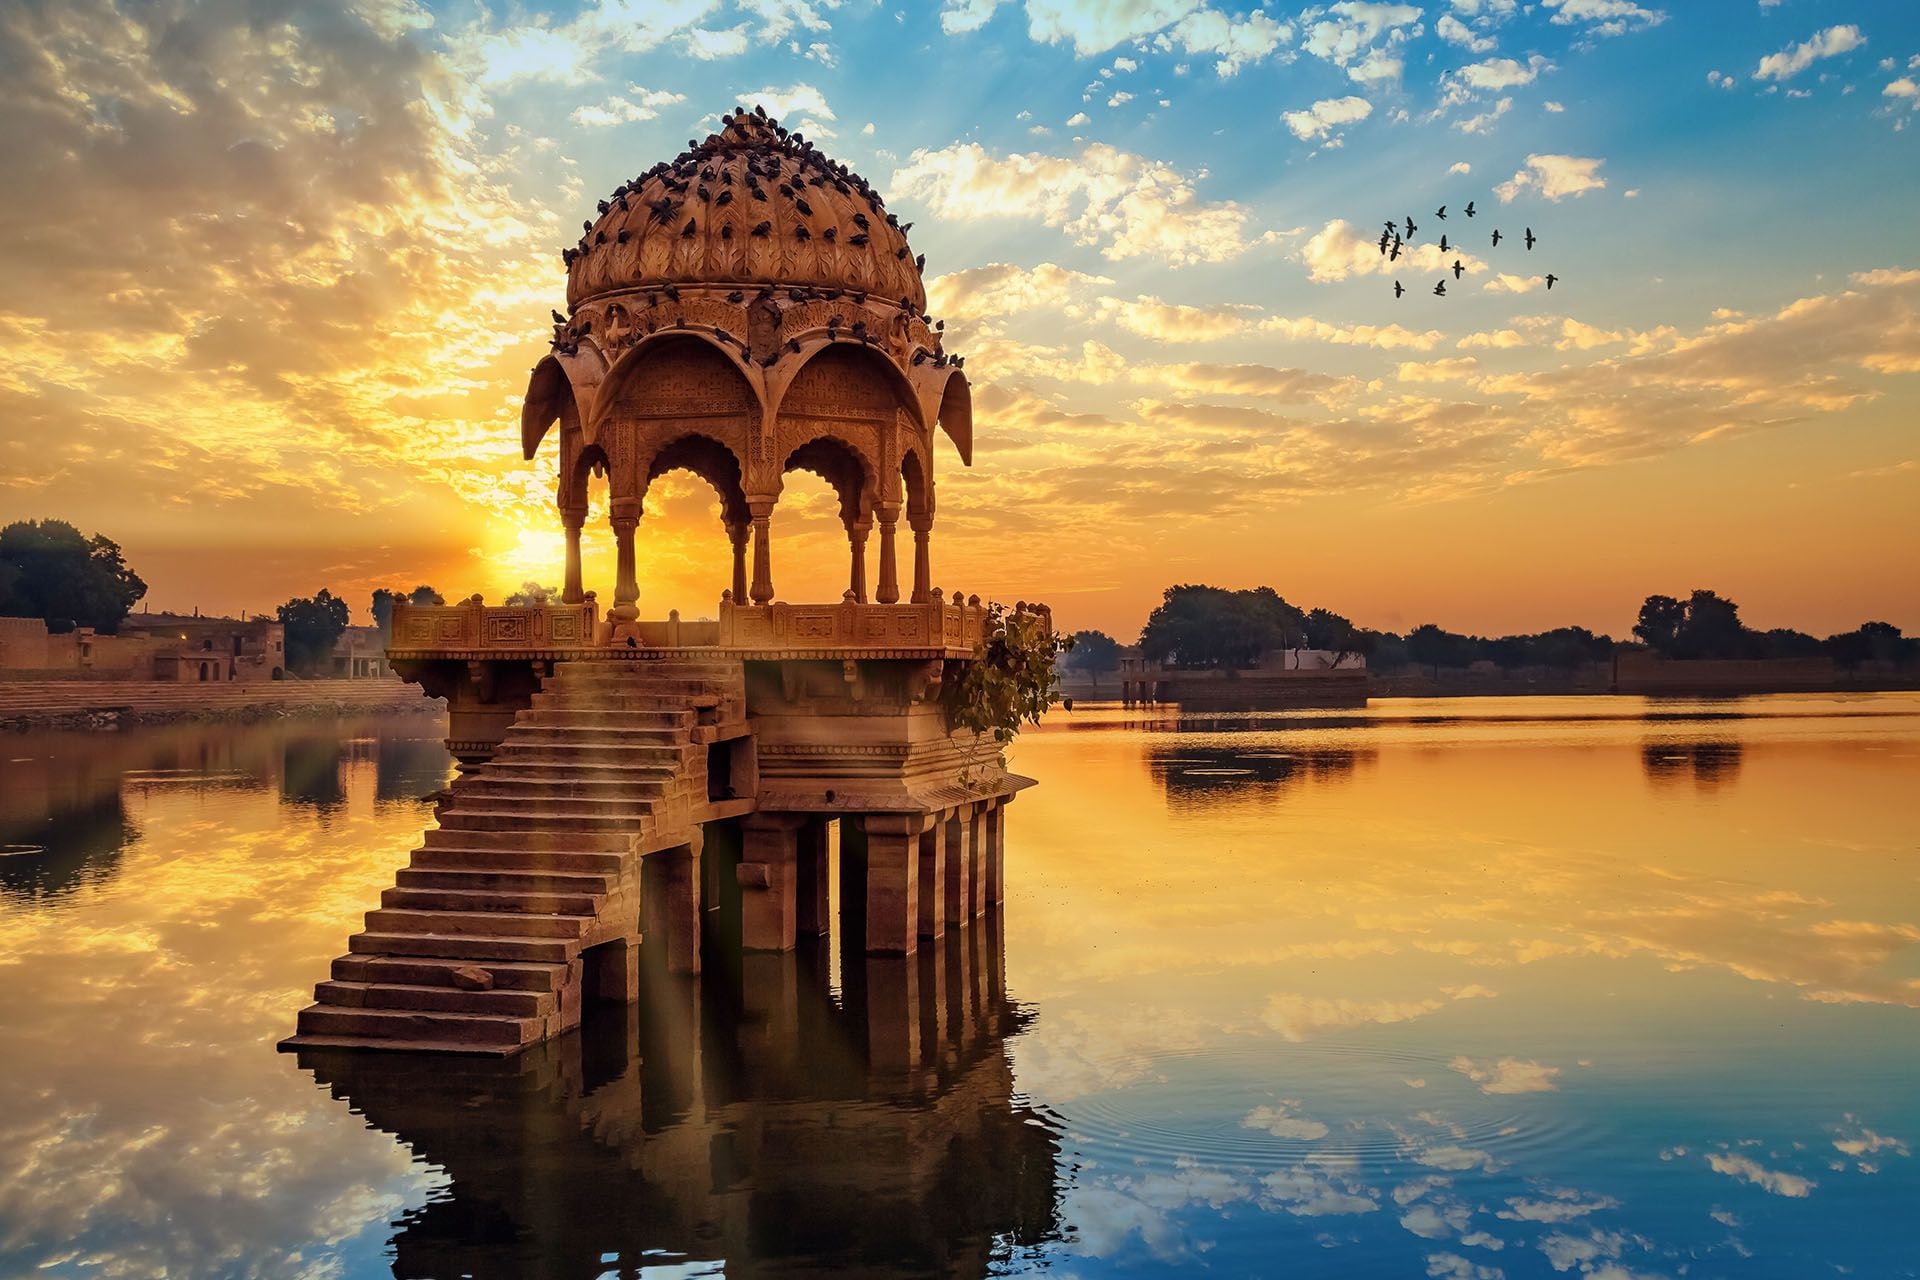 Gadisar Lake , Jaisalmer: How To Reach, Best Time & Tips